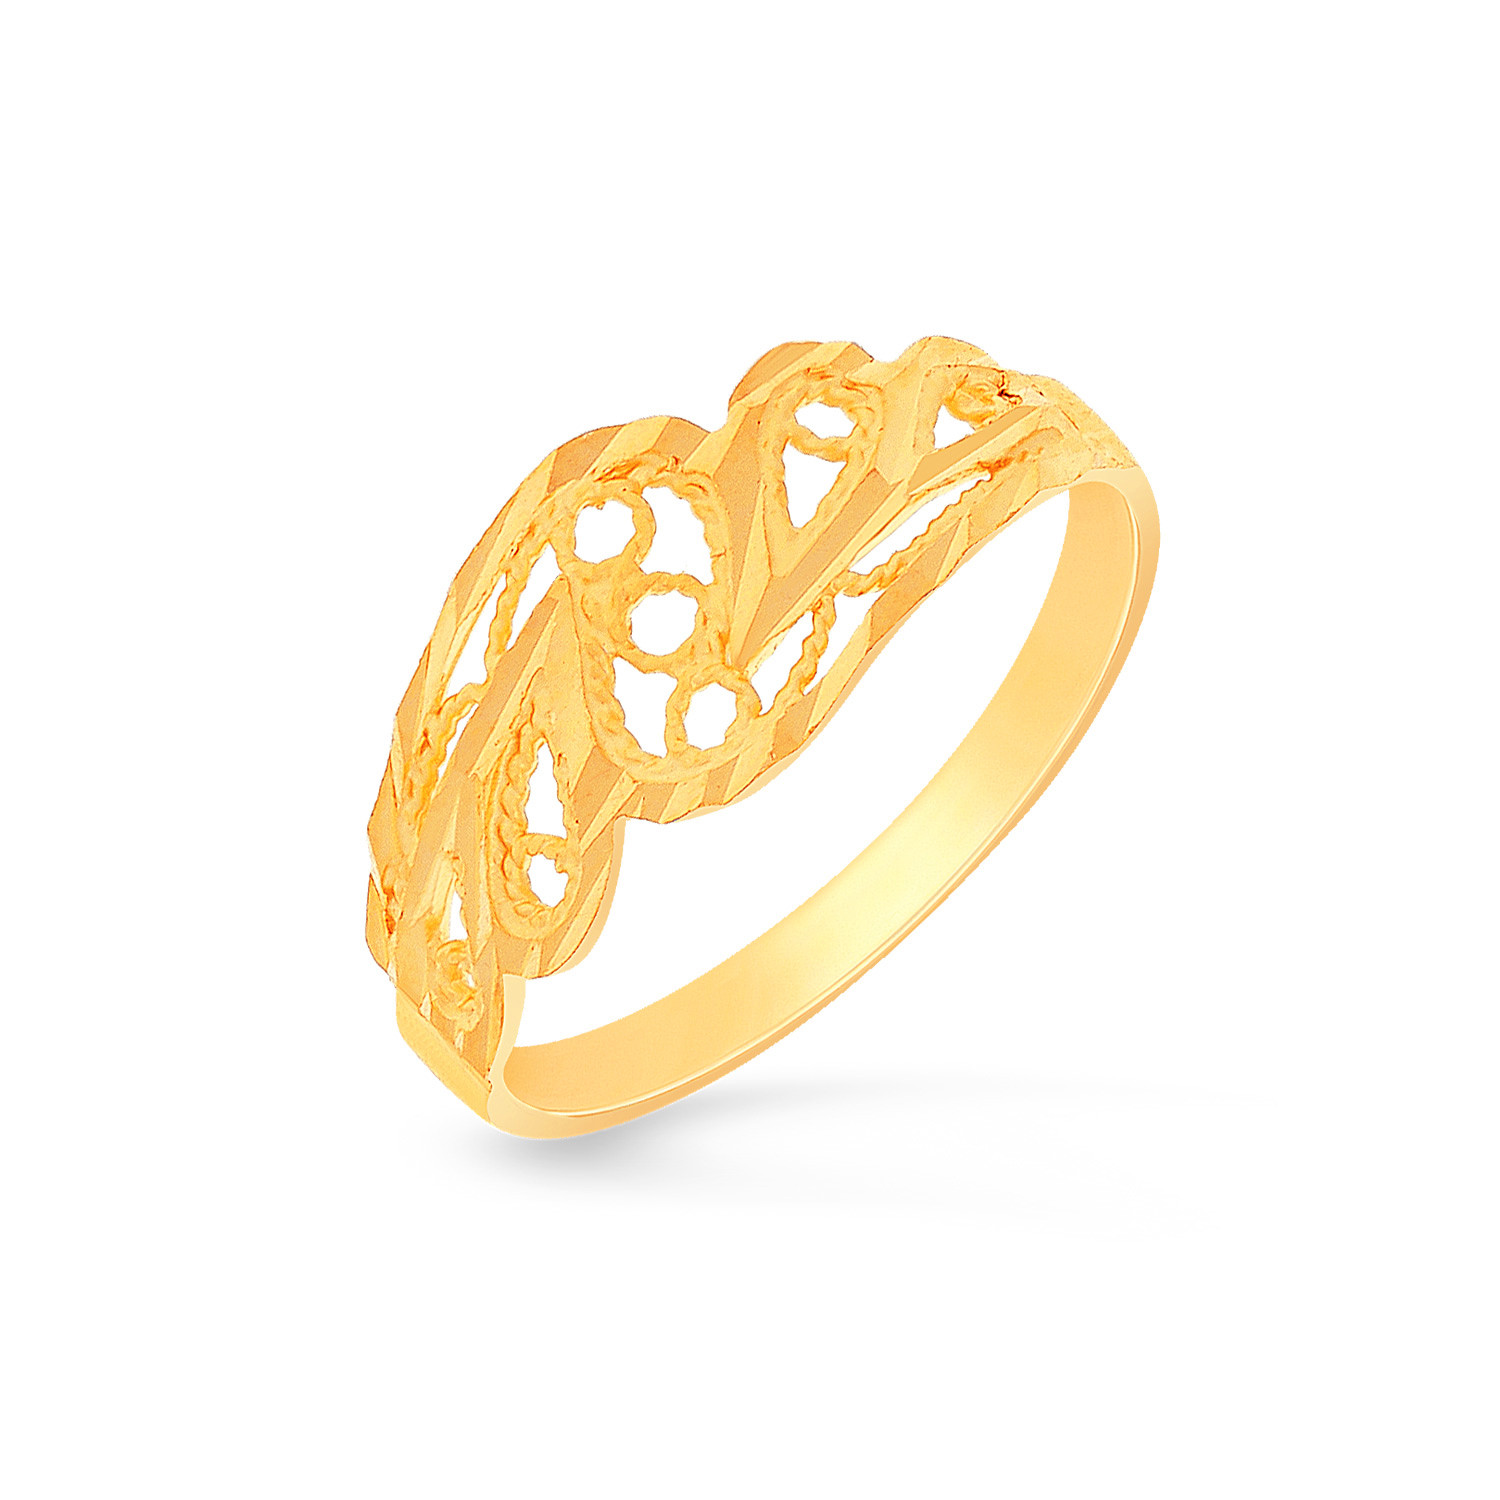 Buy Malabar Gold Ring RG1984267 for Men Online | Malabar Gold & Diamonds